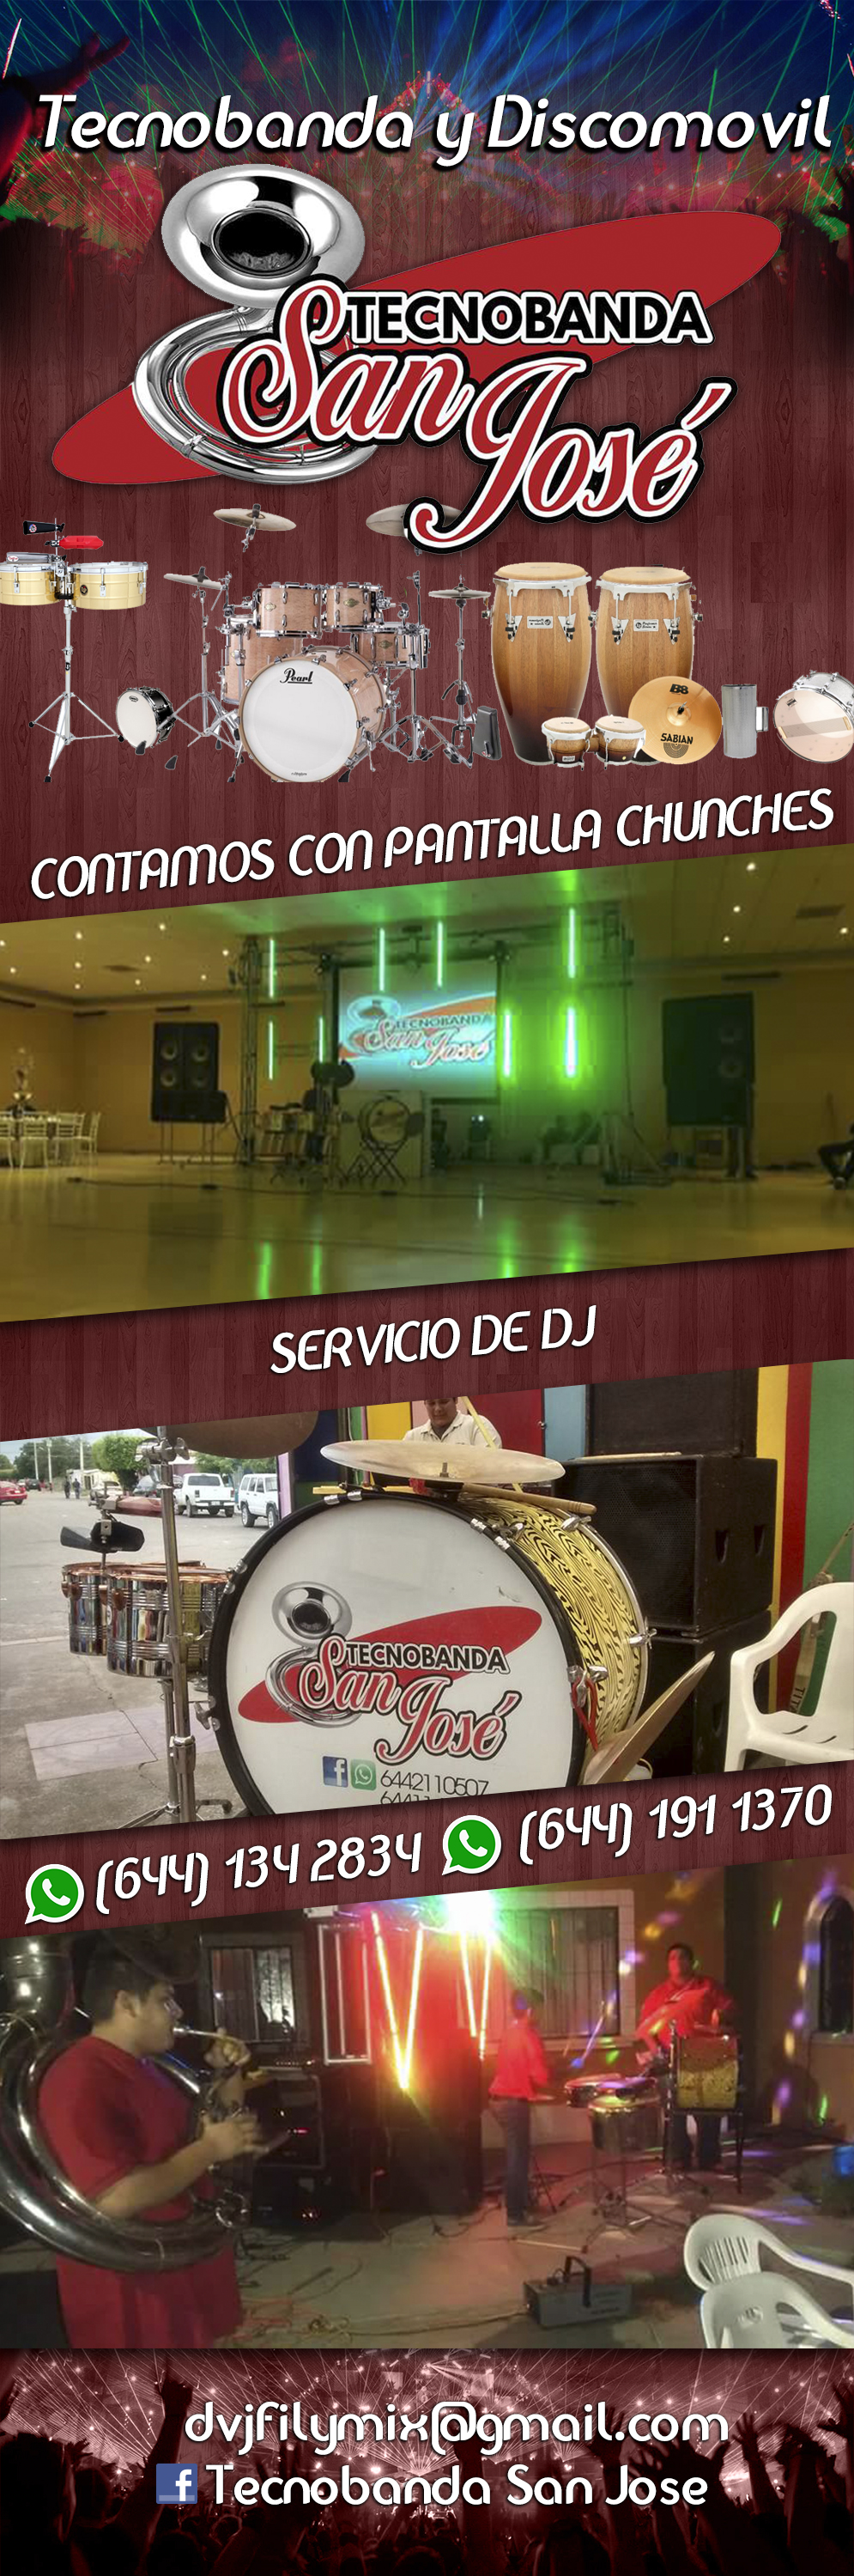 Tecnobanda San JosÃ©-Servicio de TecnoBanda, Discomovil y DJ. Contamos con Pantallas, Chunches para tu evento. 